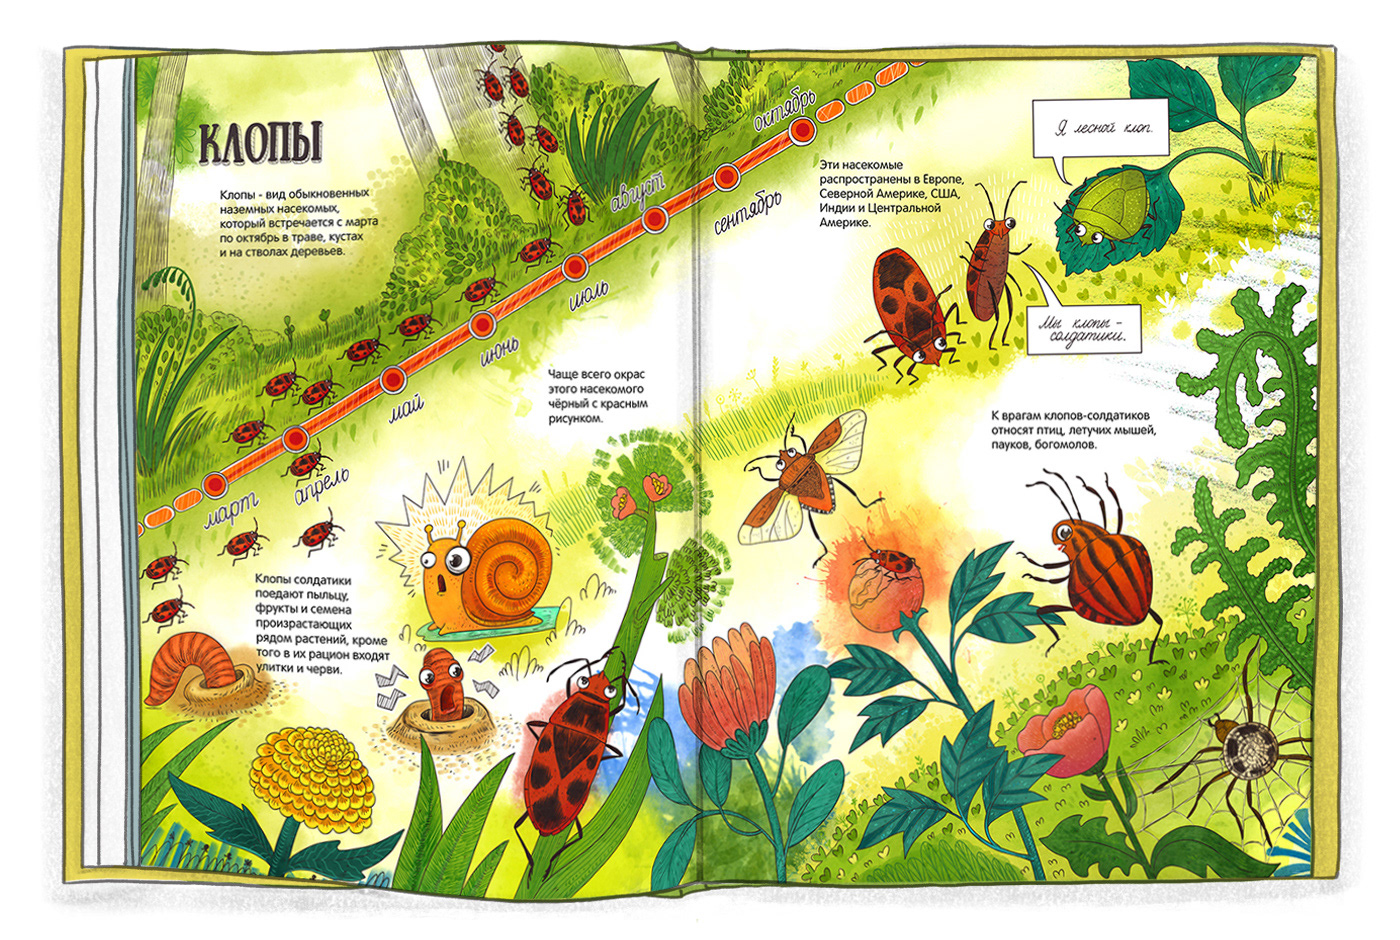 book cover Character design  children illustration children's book insect Picture book Digital Art  ILLUSTRATION  non-fiction Wimmelbild